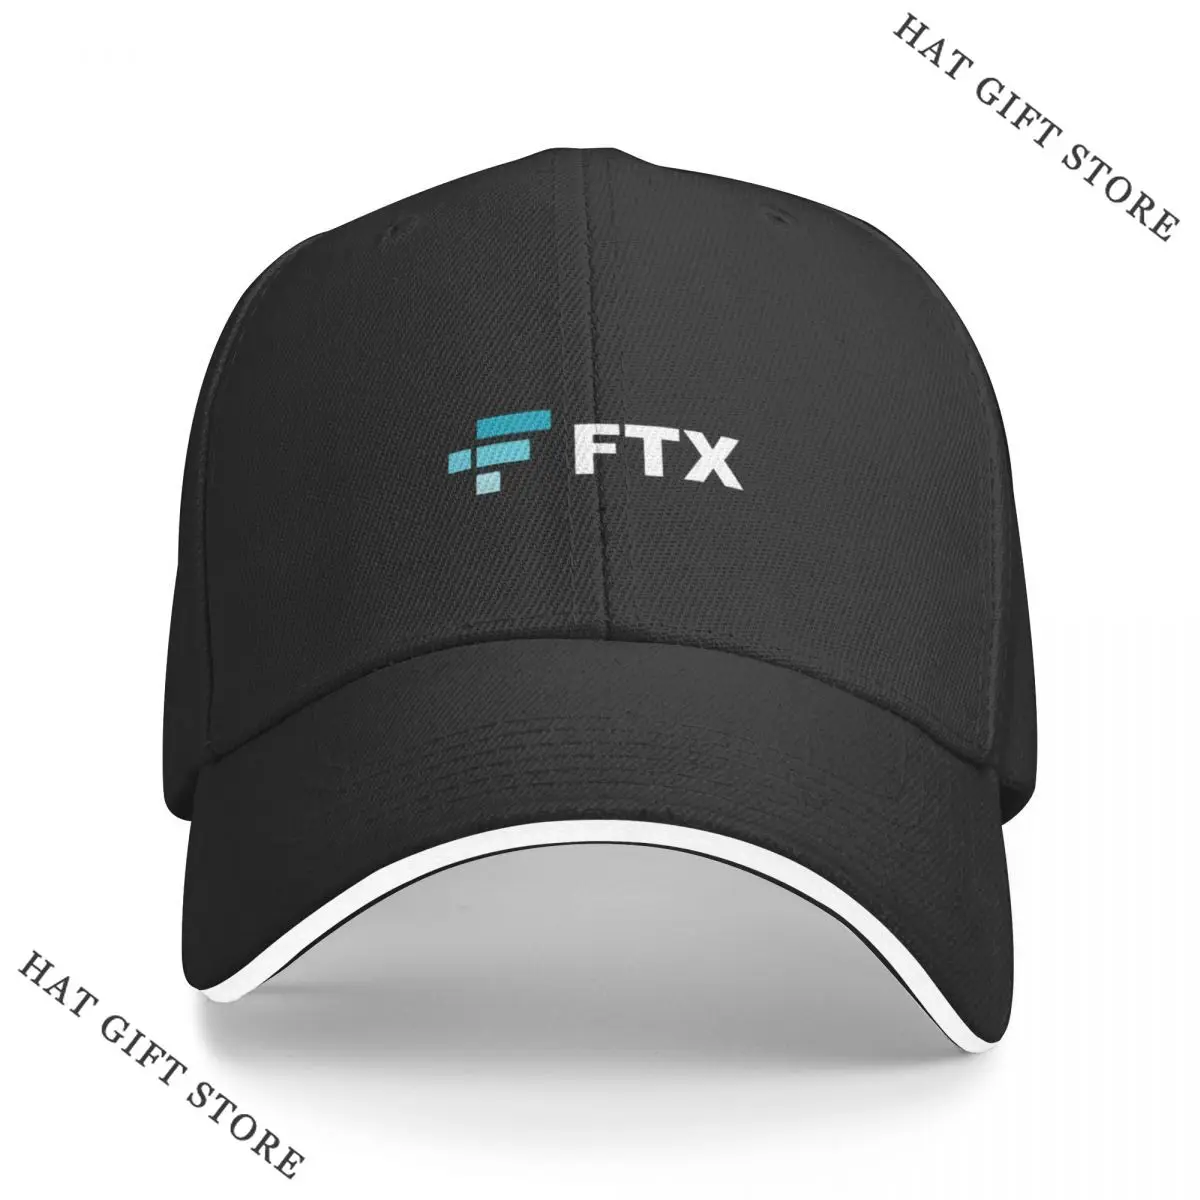 

Best What Is Ftx On Umpire - Ftx Baseball Cap Trucker Hats Snapback Cap Trucker Hat western hats Hat Ladies Men'S